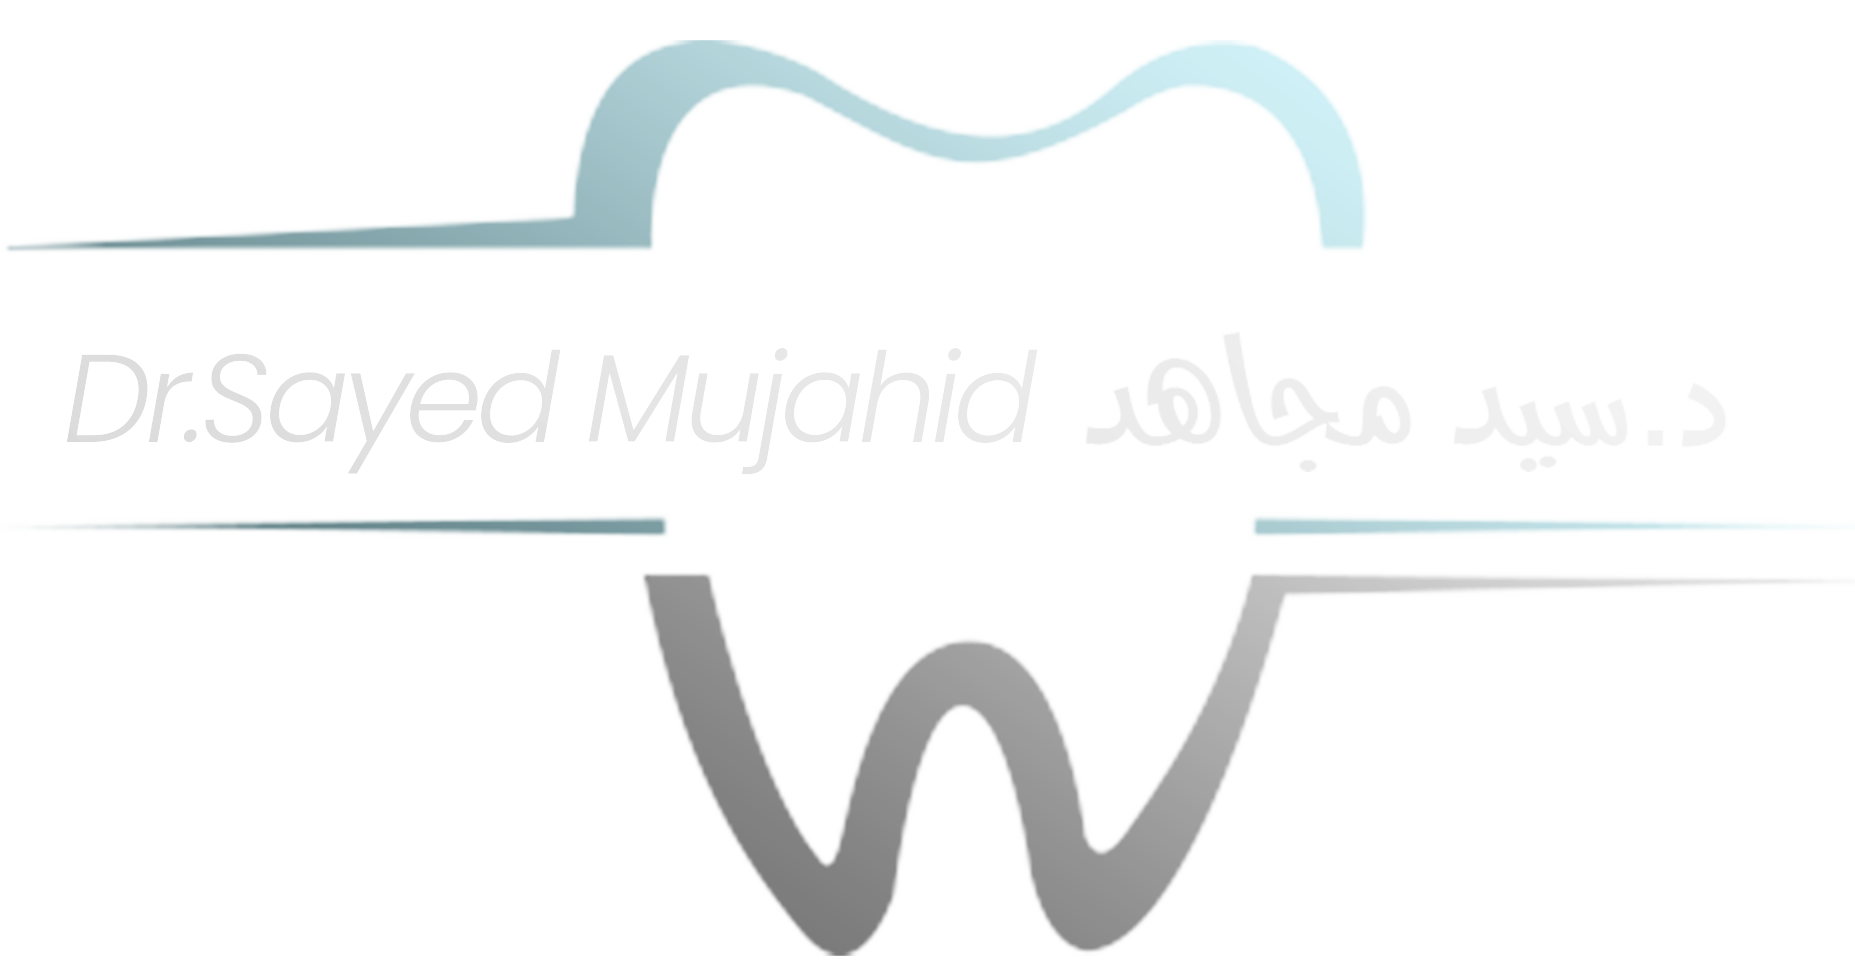 Dr.  Sayed Mujahid